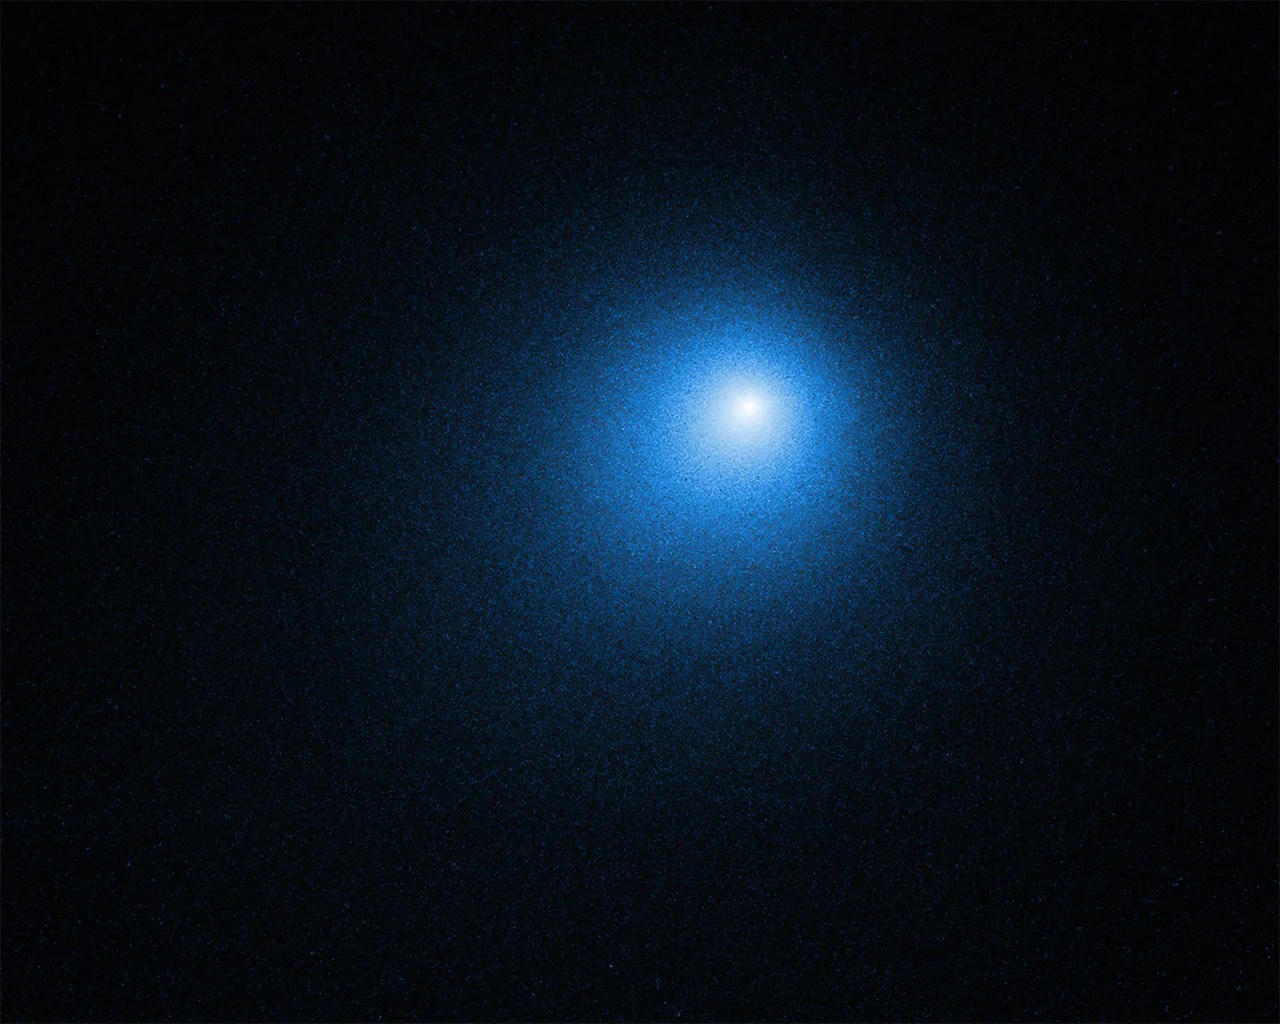 Hubble observation of comet 46P/Wirtanen